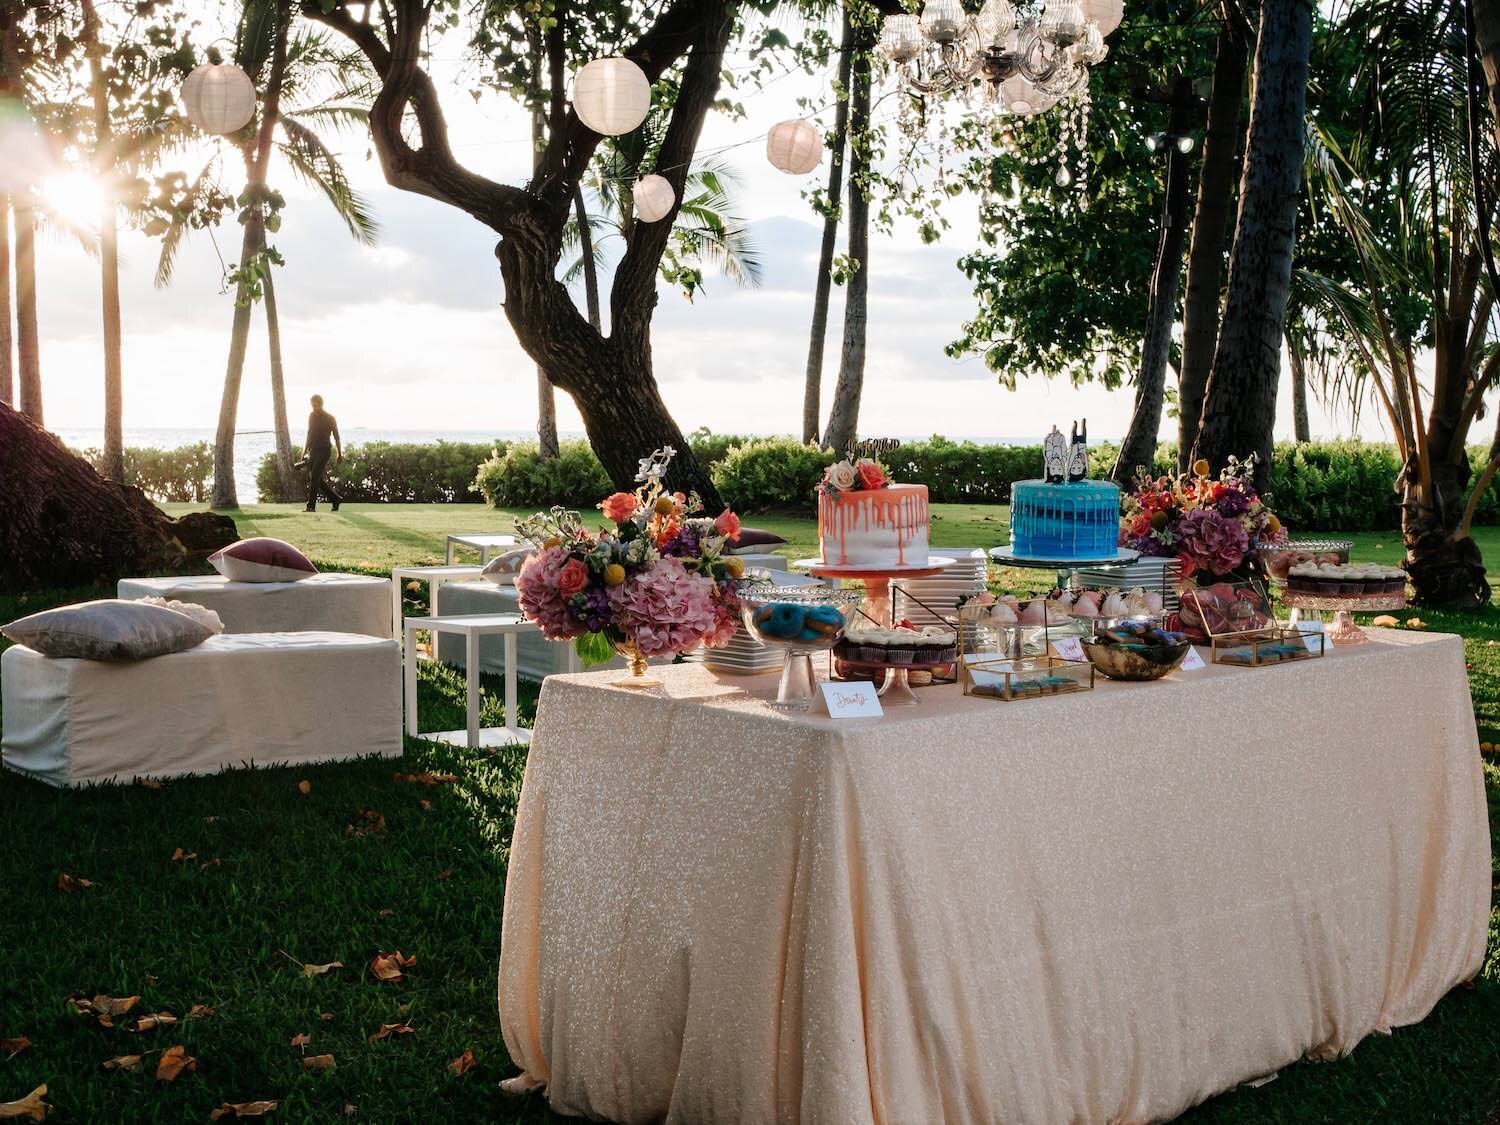 Lanikuhonua Phase 2 Wedding Venue on Oahu Honolulu Hawaii-2.jpg